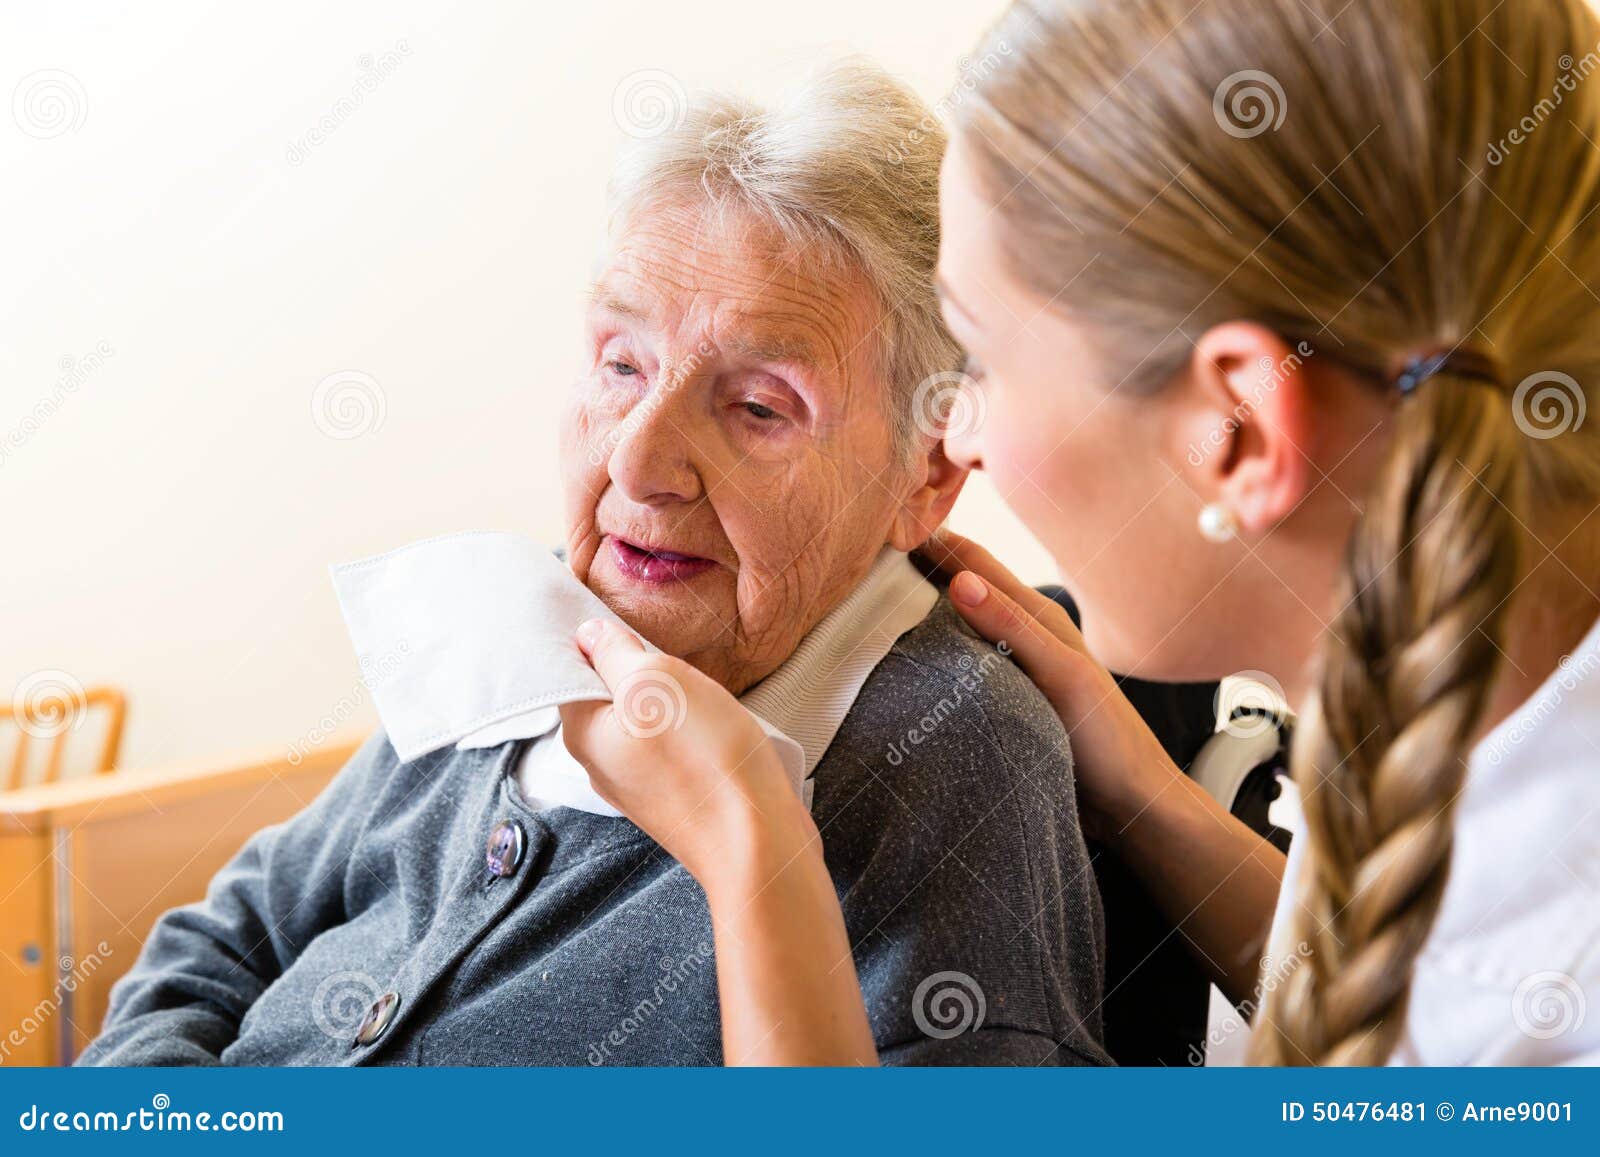 nurse-wiping-mouth-senior-woman-nursing-home-elderly-women-50476481.jpg